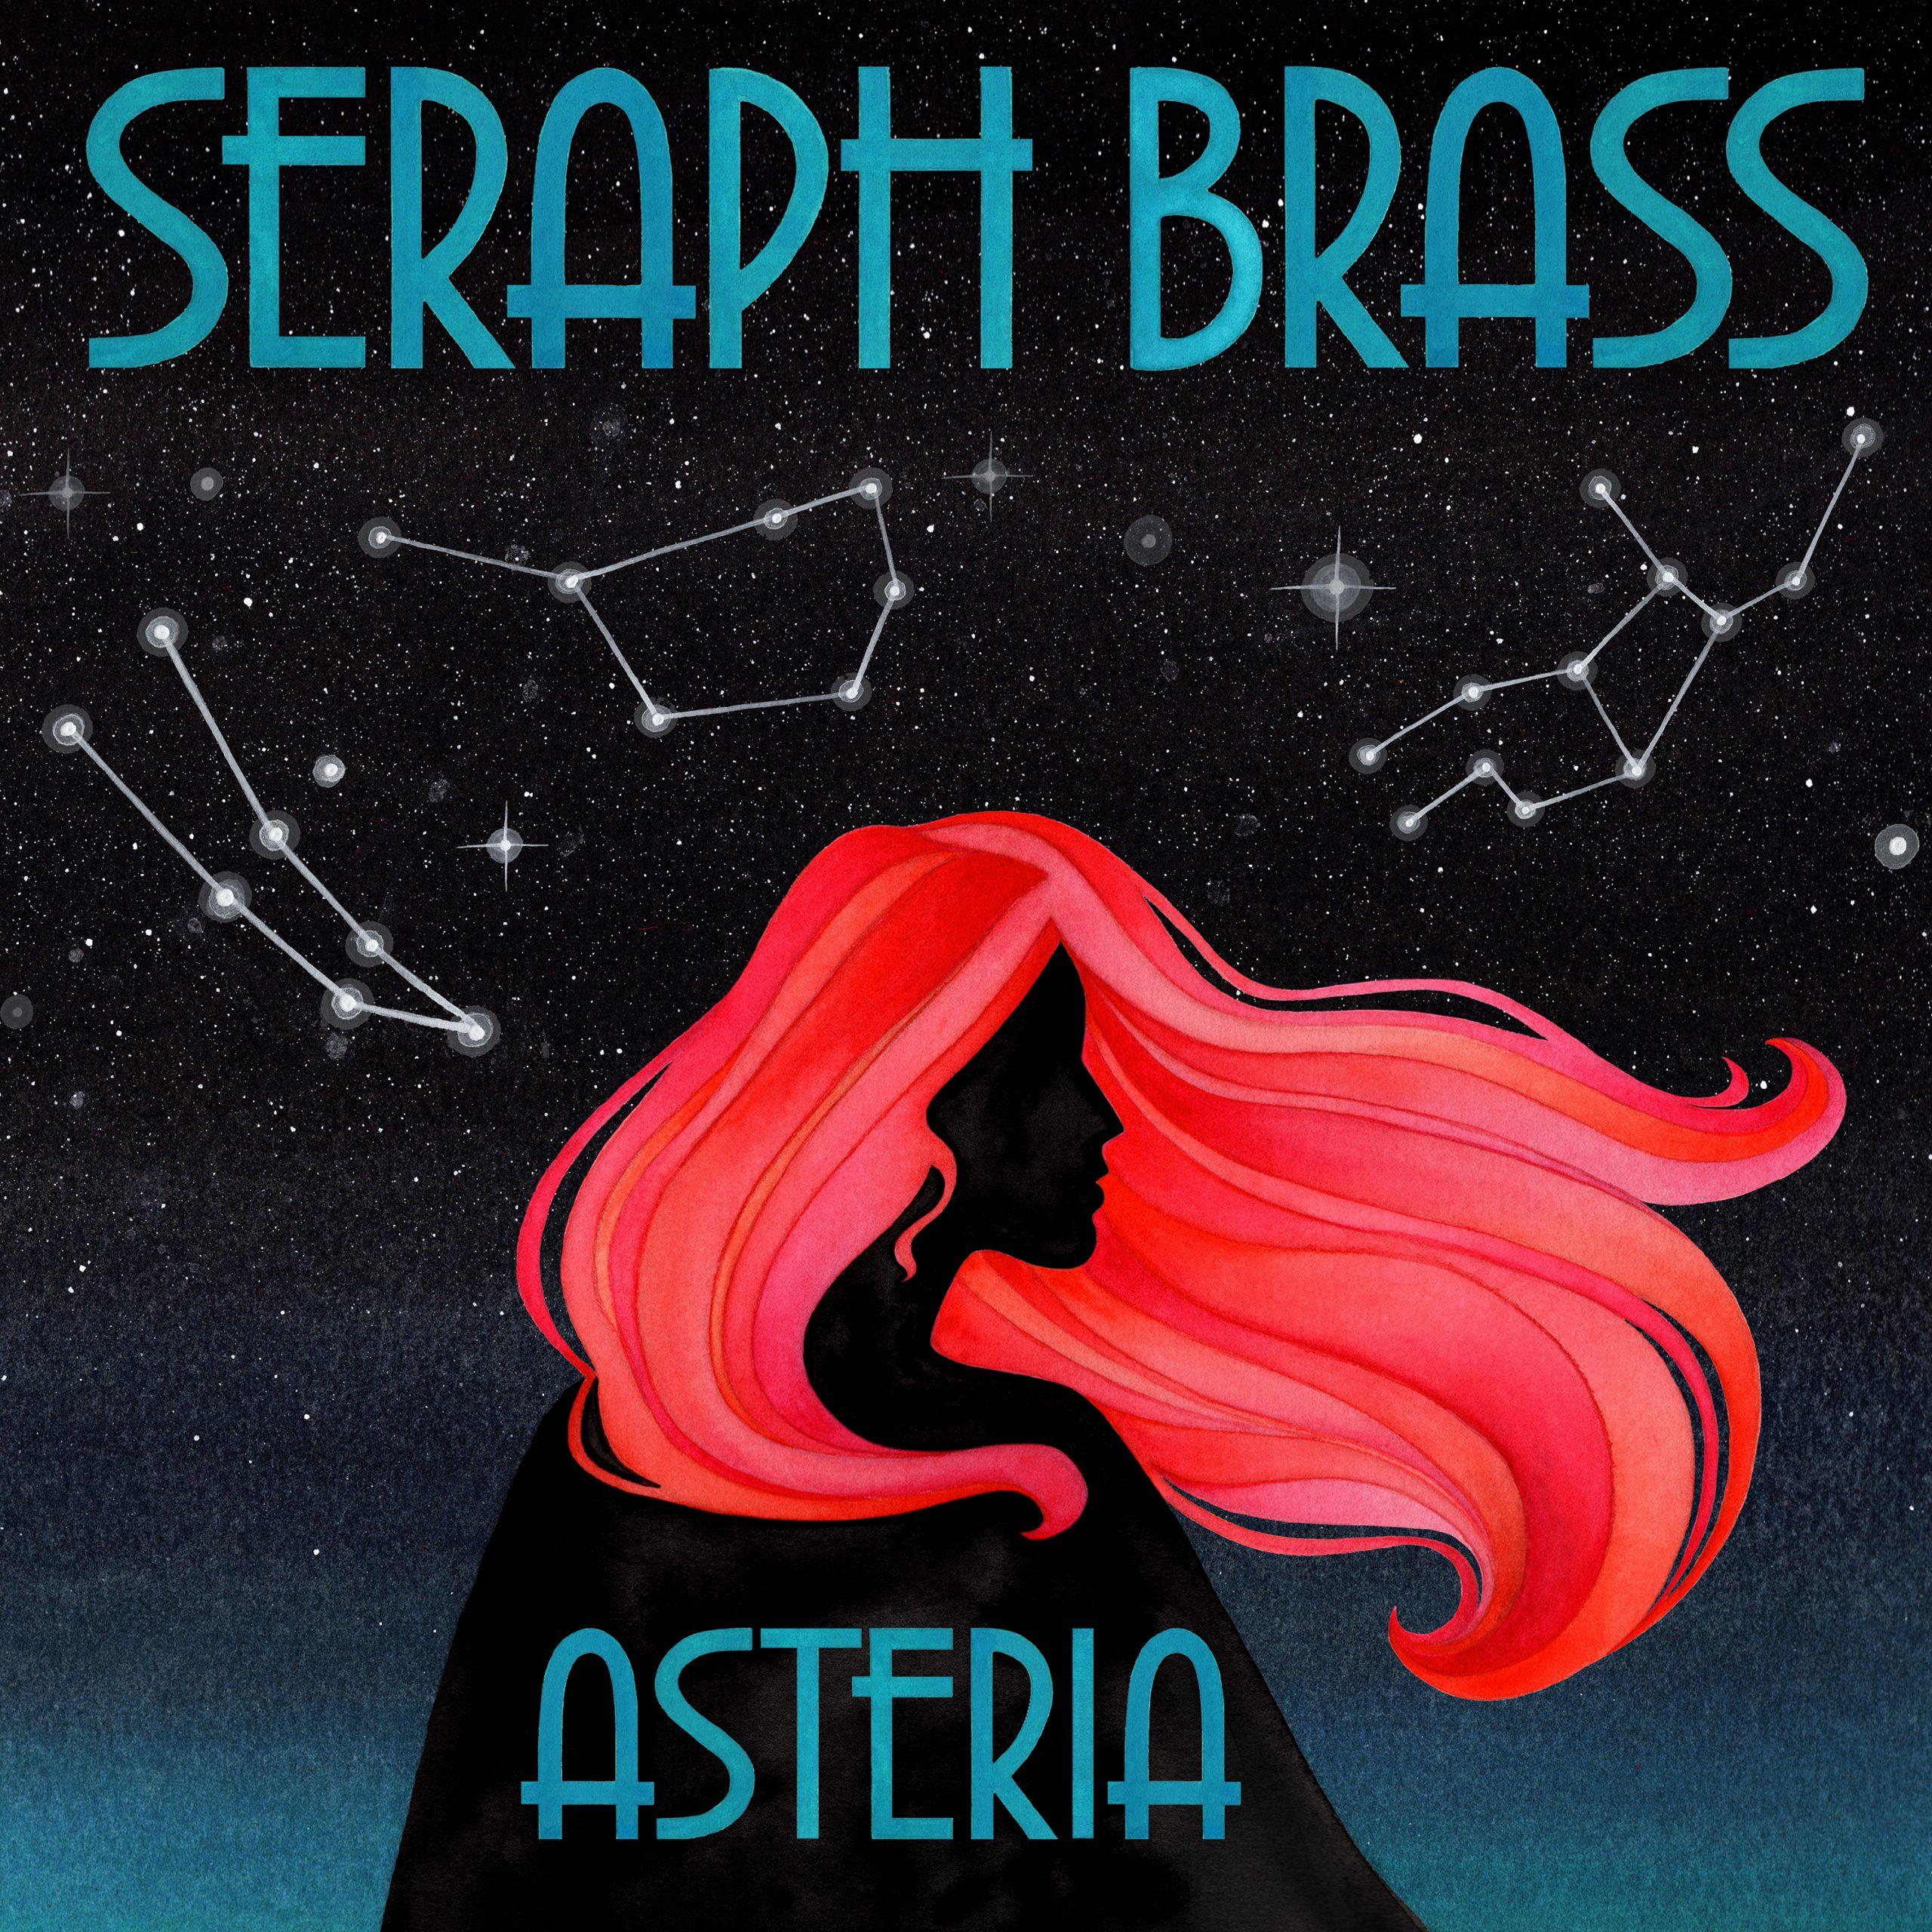 Seraph Brass Performs at Artosphere Festival